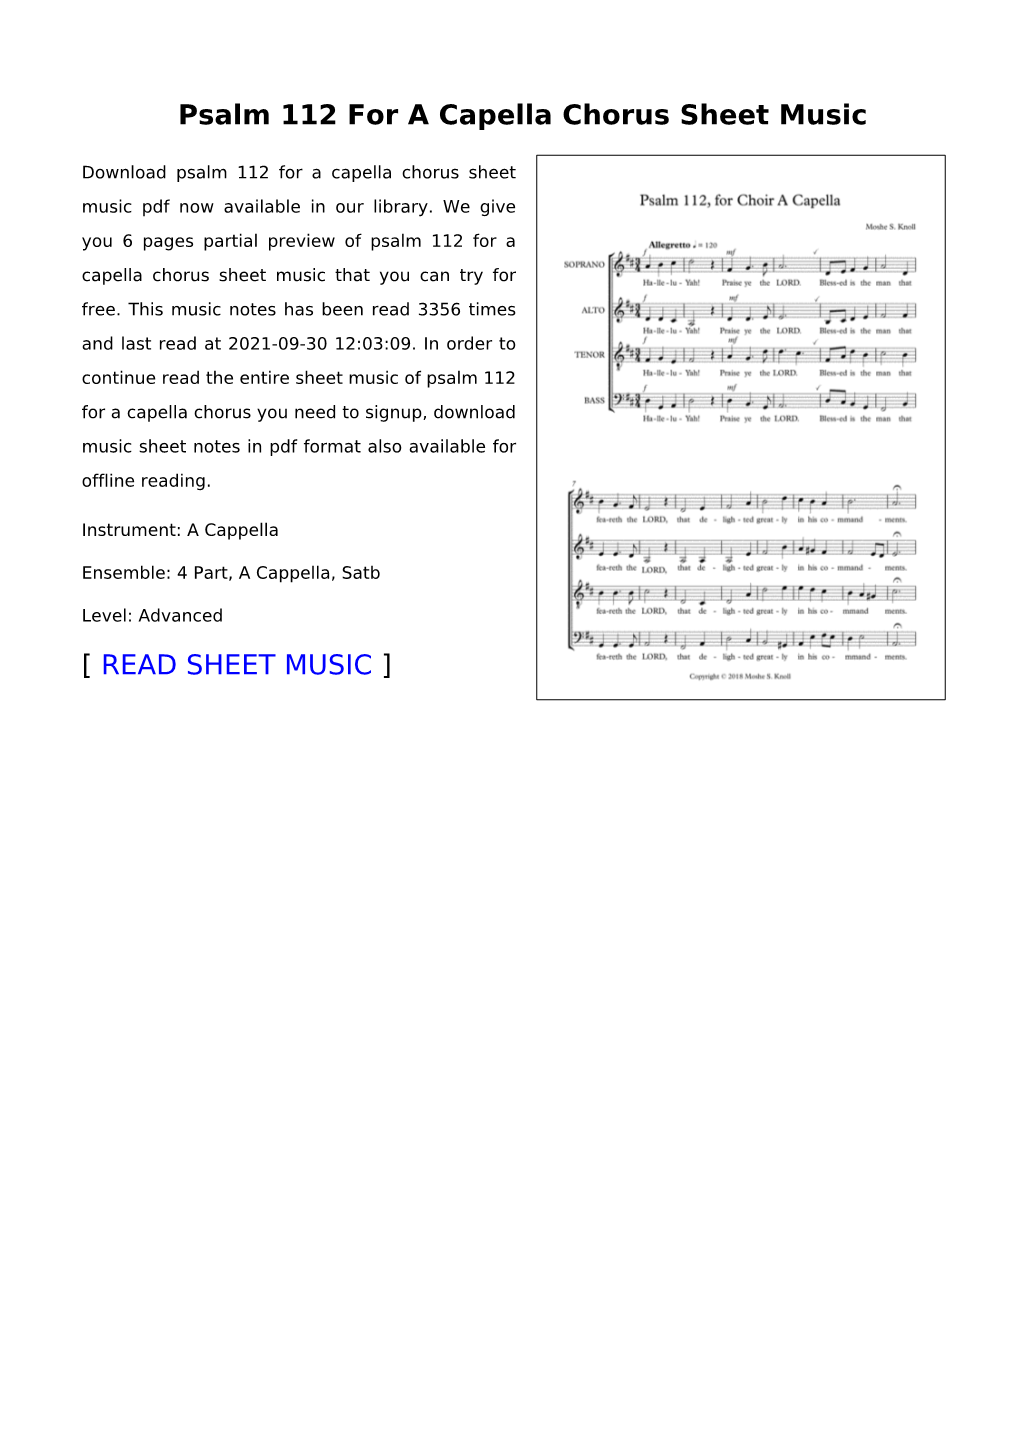 Psalm 112 for a Capella Chorus Sheet Music